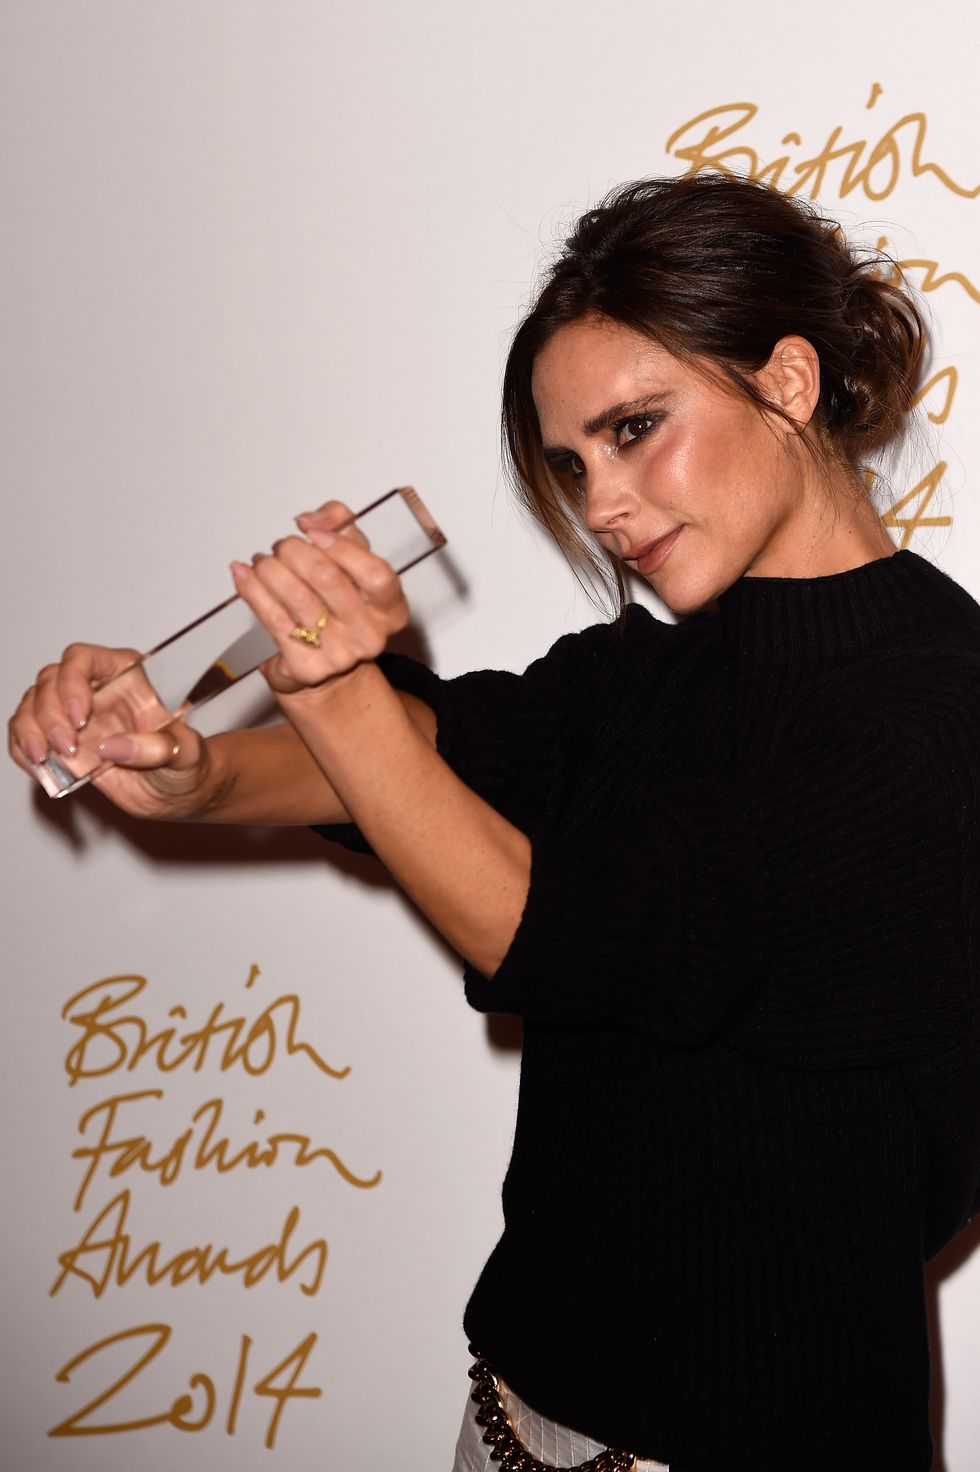 Victoria Beckham at BFAs 2014 - British Fashion Awards 2014: Celebrity beauty looks